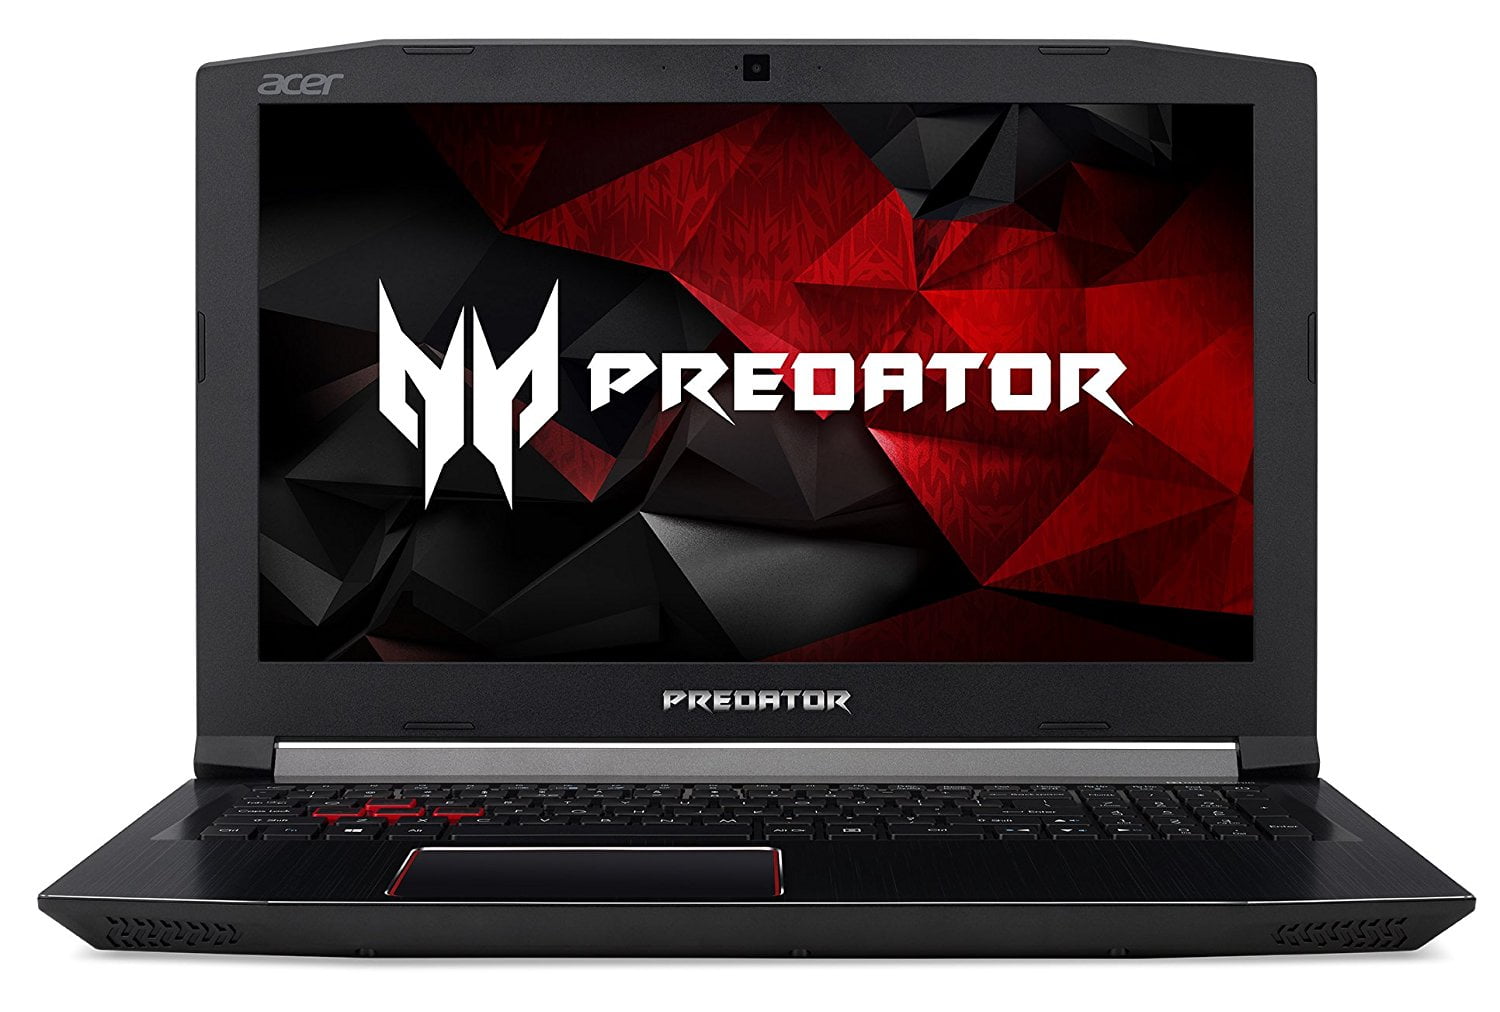 Acer Predator Helios 300 Gaming Laptop, Core i7-7700HQ, GeForce GTX 1060 6GB, 15.6" Full HD, 16GB DDR4, SSD, G3-571-77QK, Black Notebook PC Computer VR Virtual Reality Ready - Walmart.com